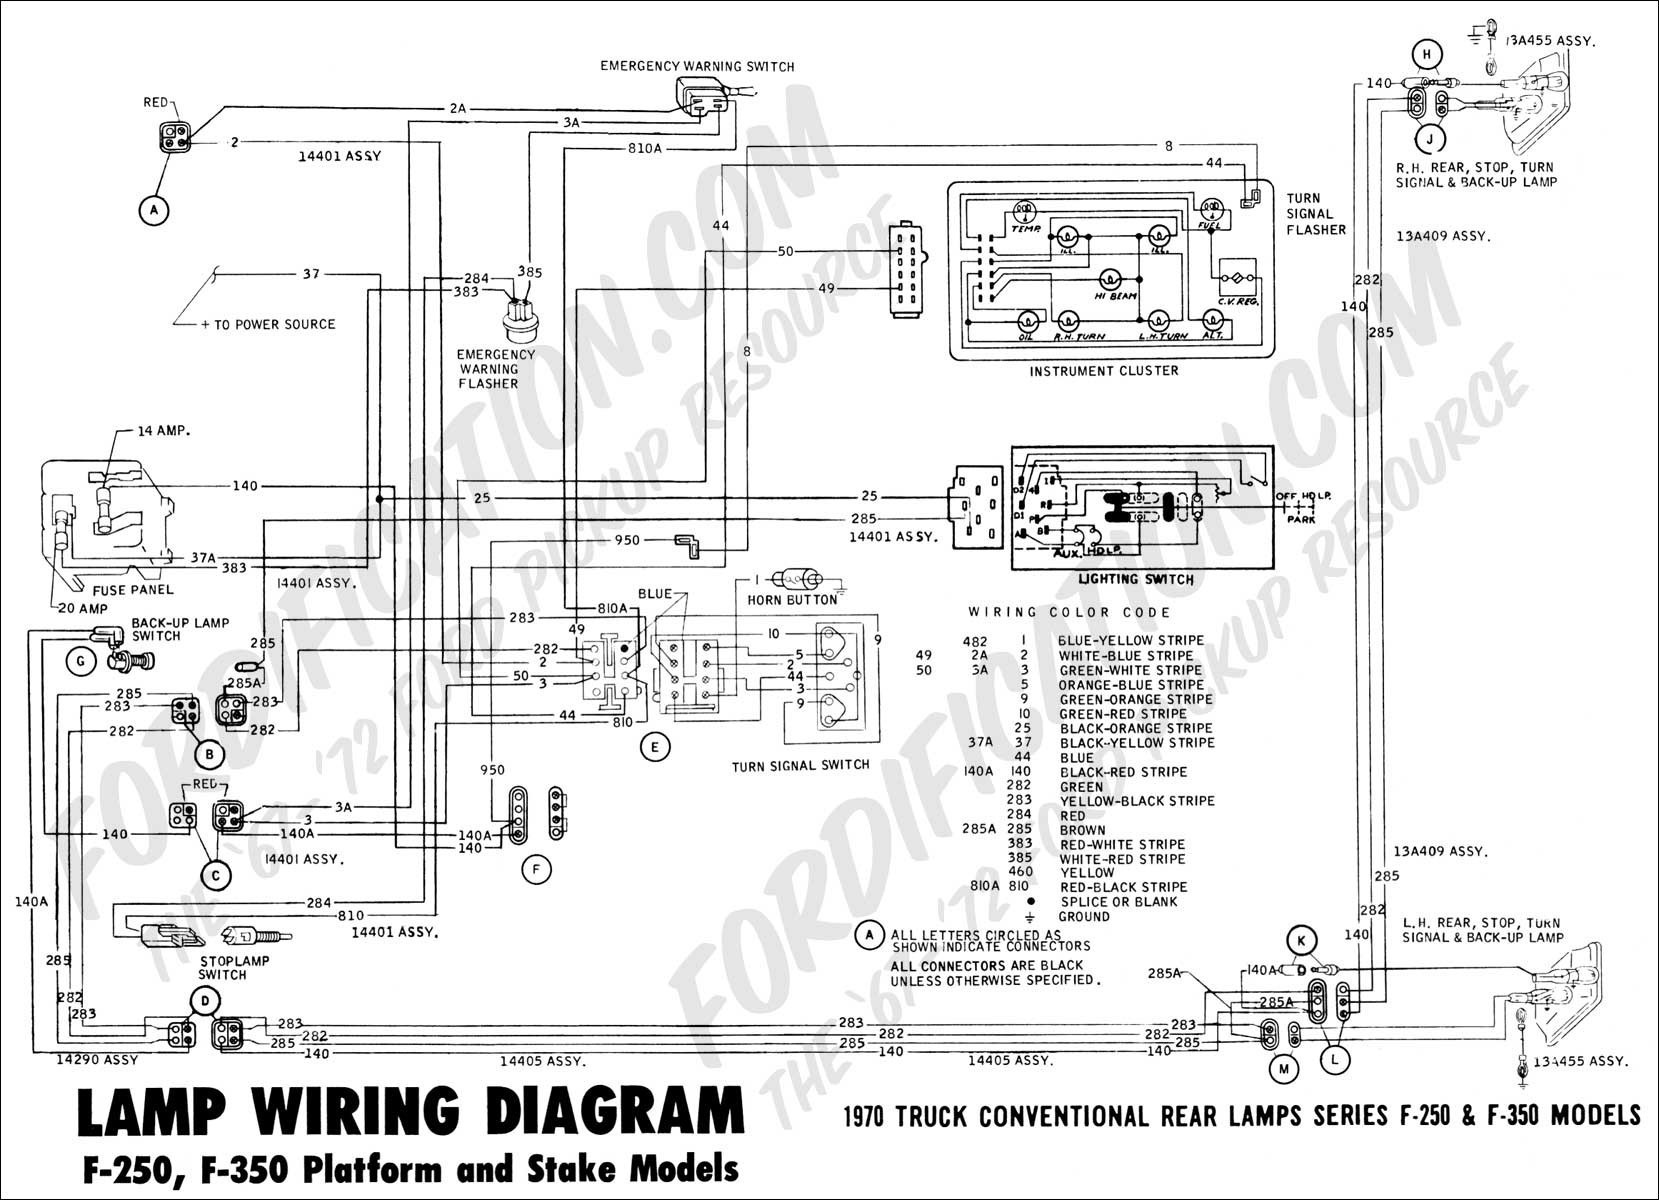 2000 Silverado Tail Light Wiring Diagram 2001 Chevy Silverado Tail Light Wiring Diagram Of 2000 Silverado Tail Light Wiring Diagram